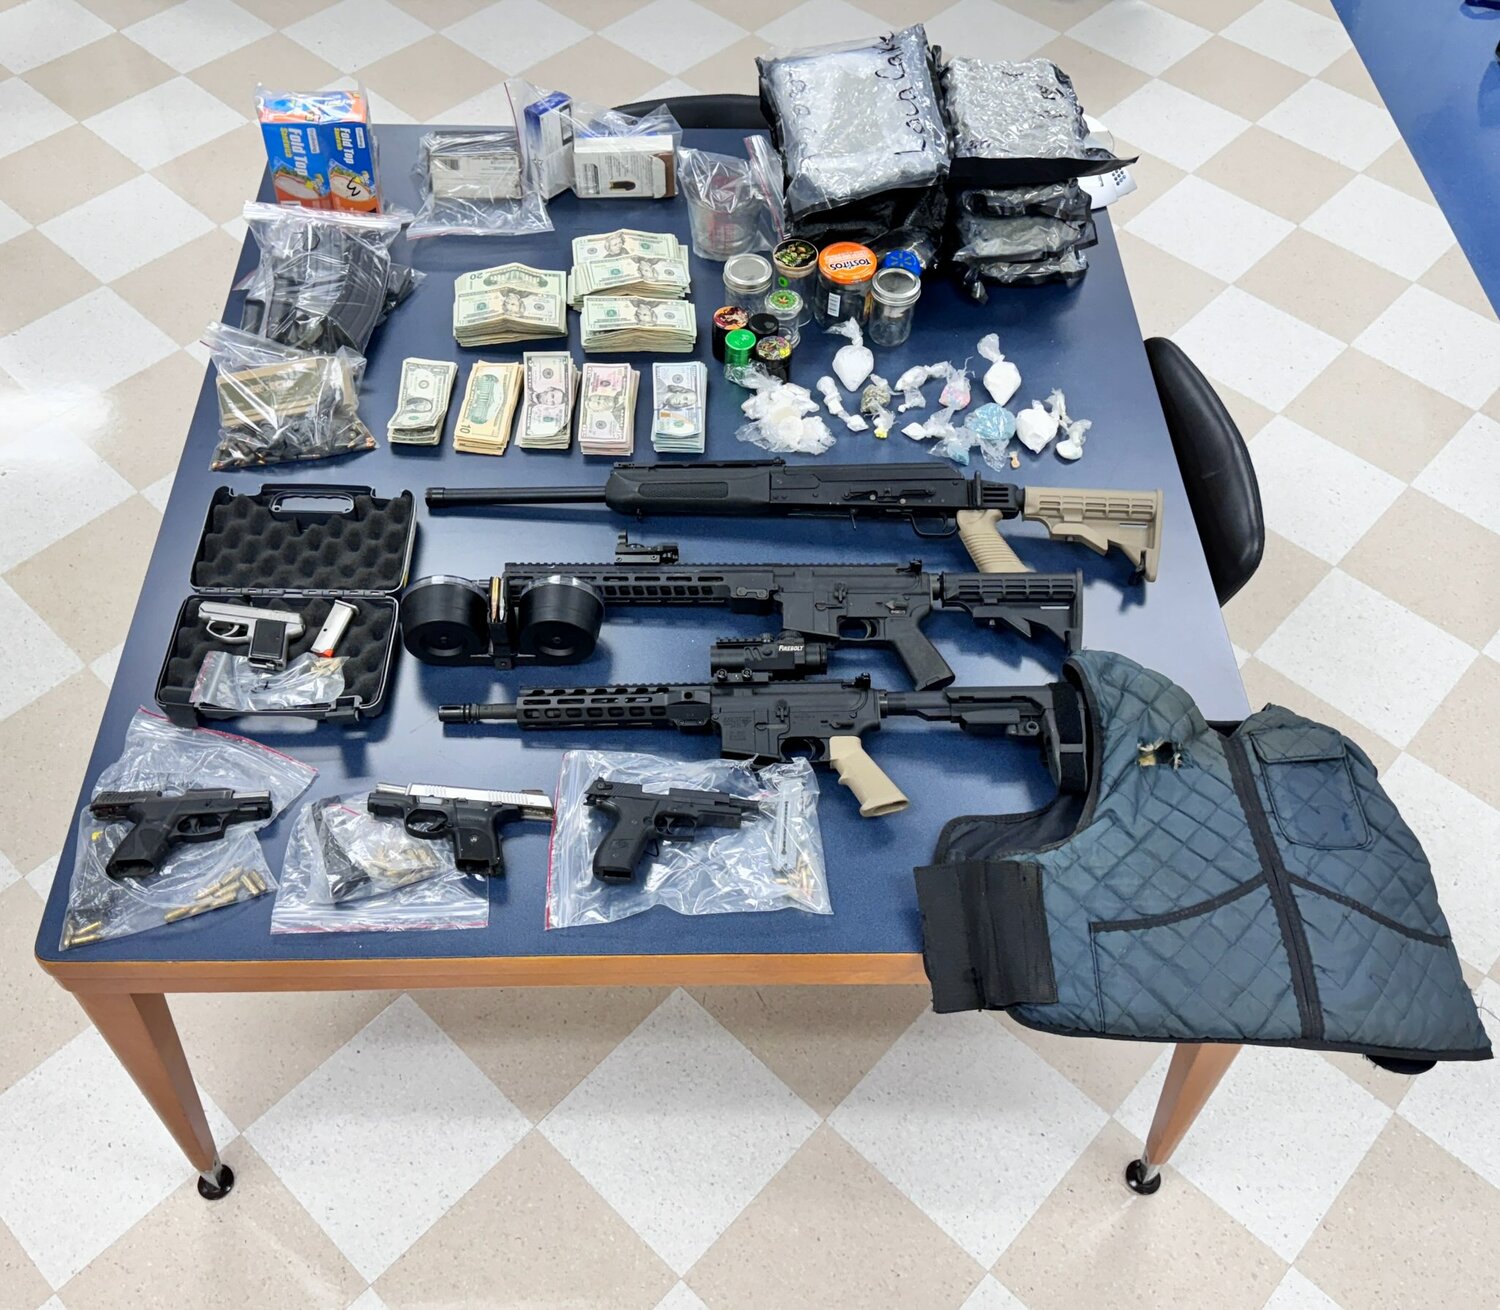 Items seized following the arrest of David Matthews